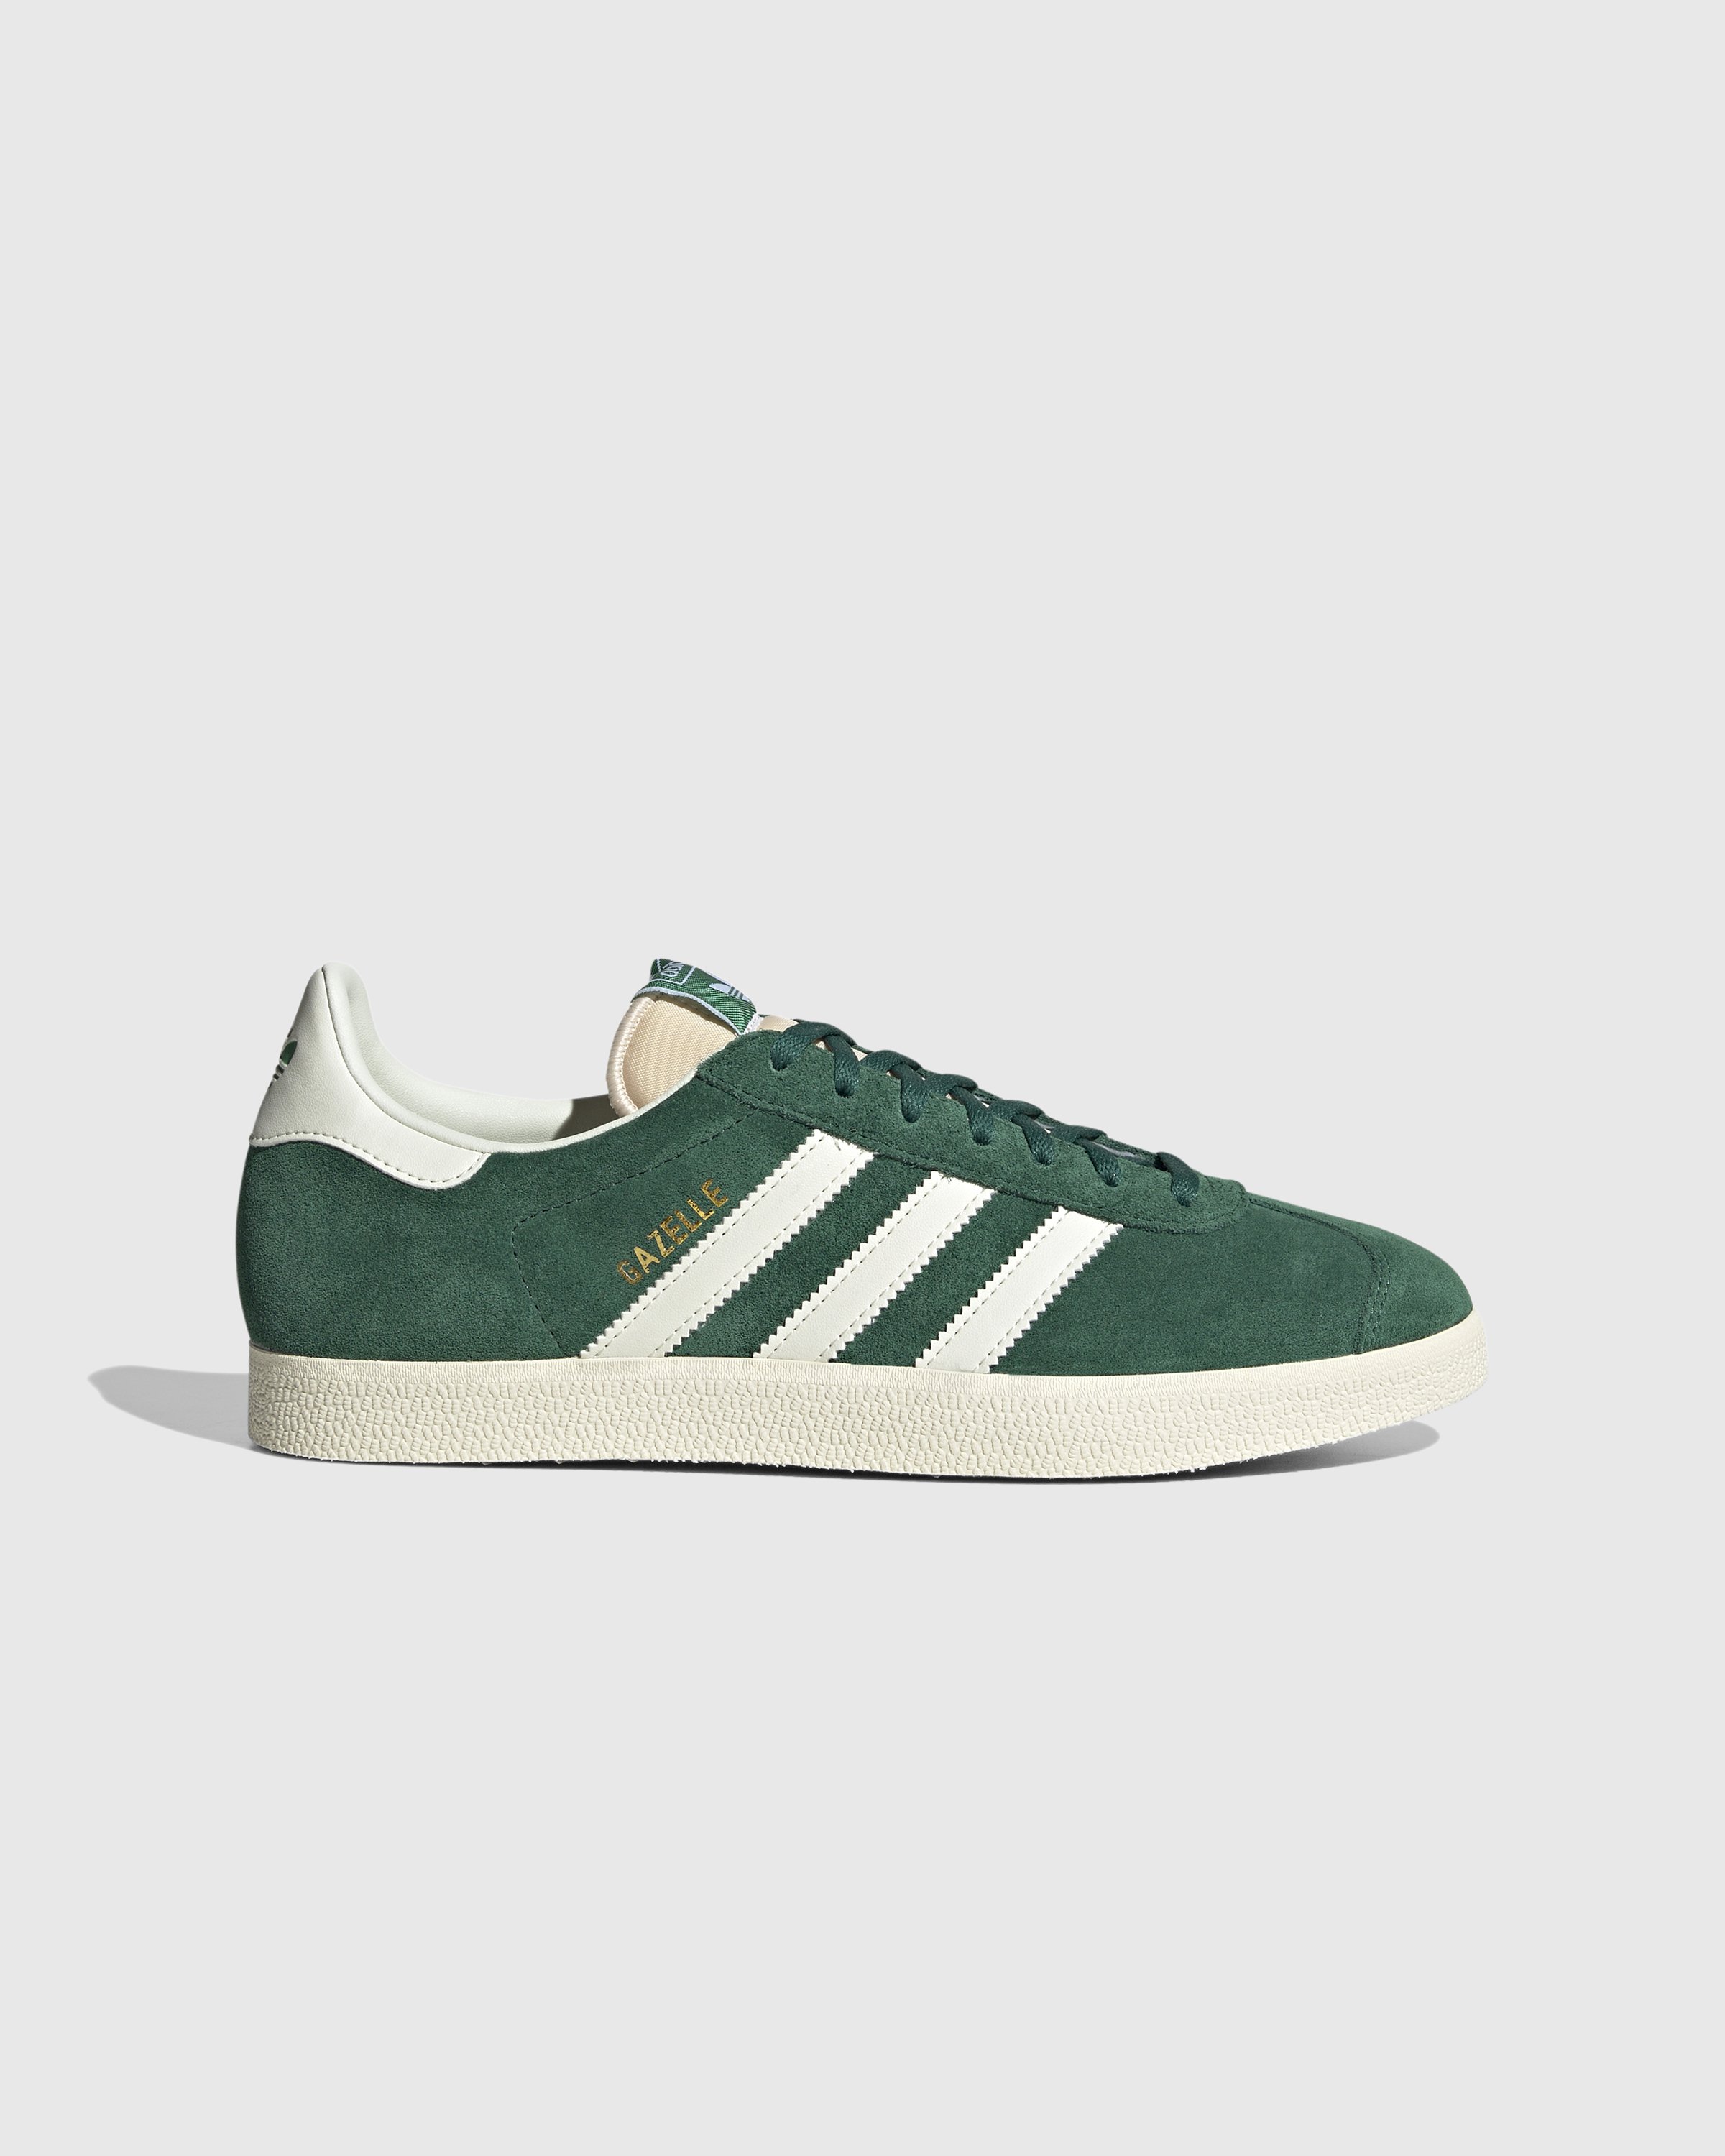 Adidas - Gazelle Green/White - Footwear - Green - Image 1